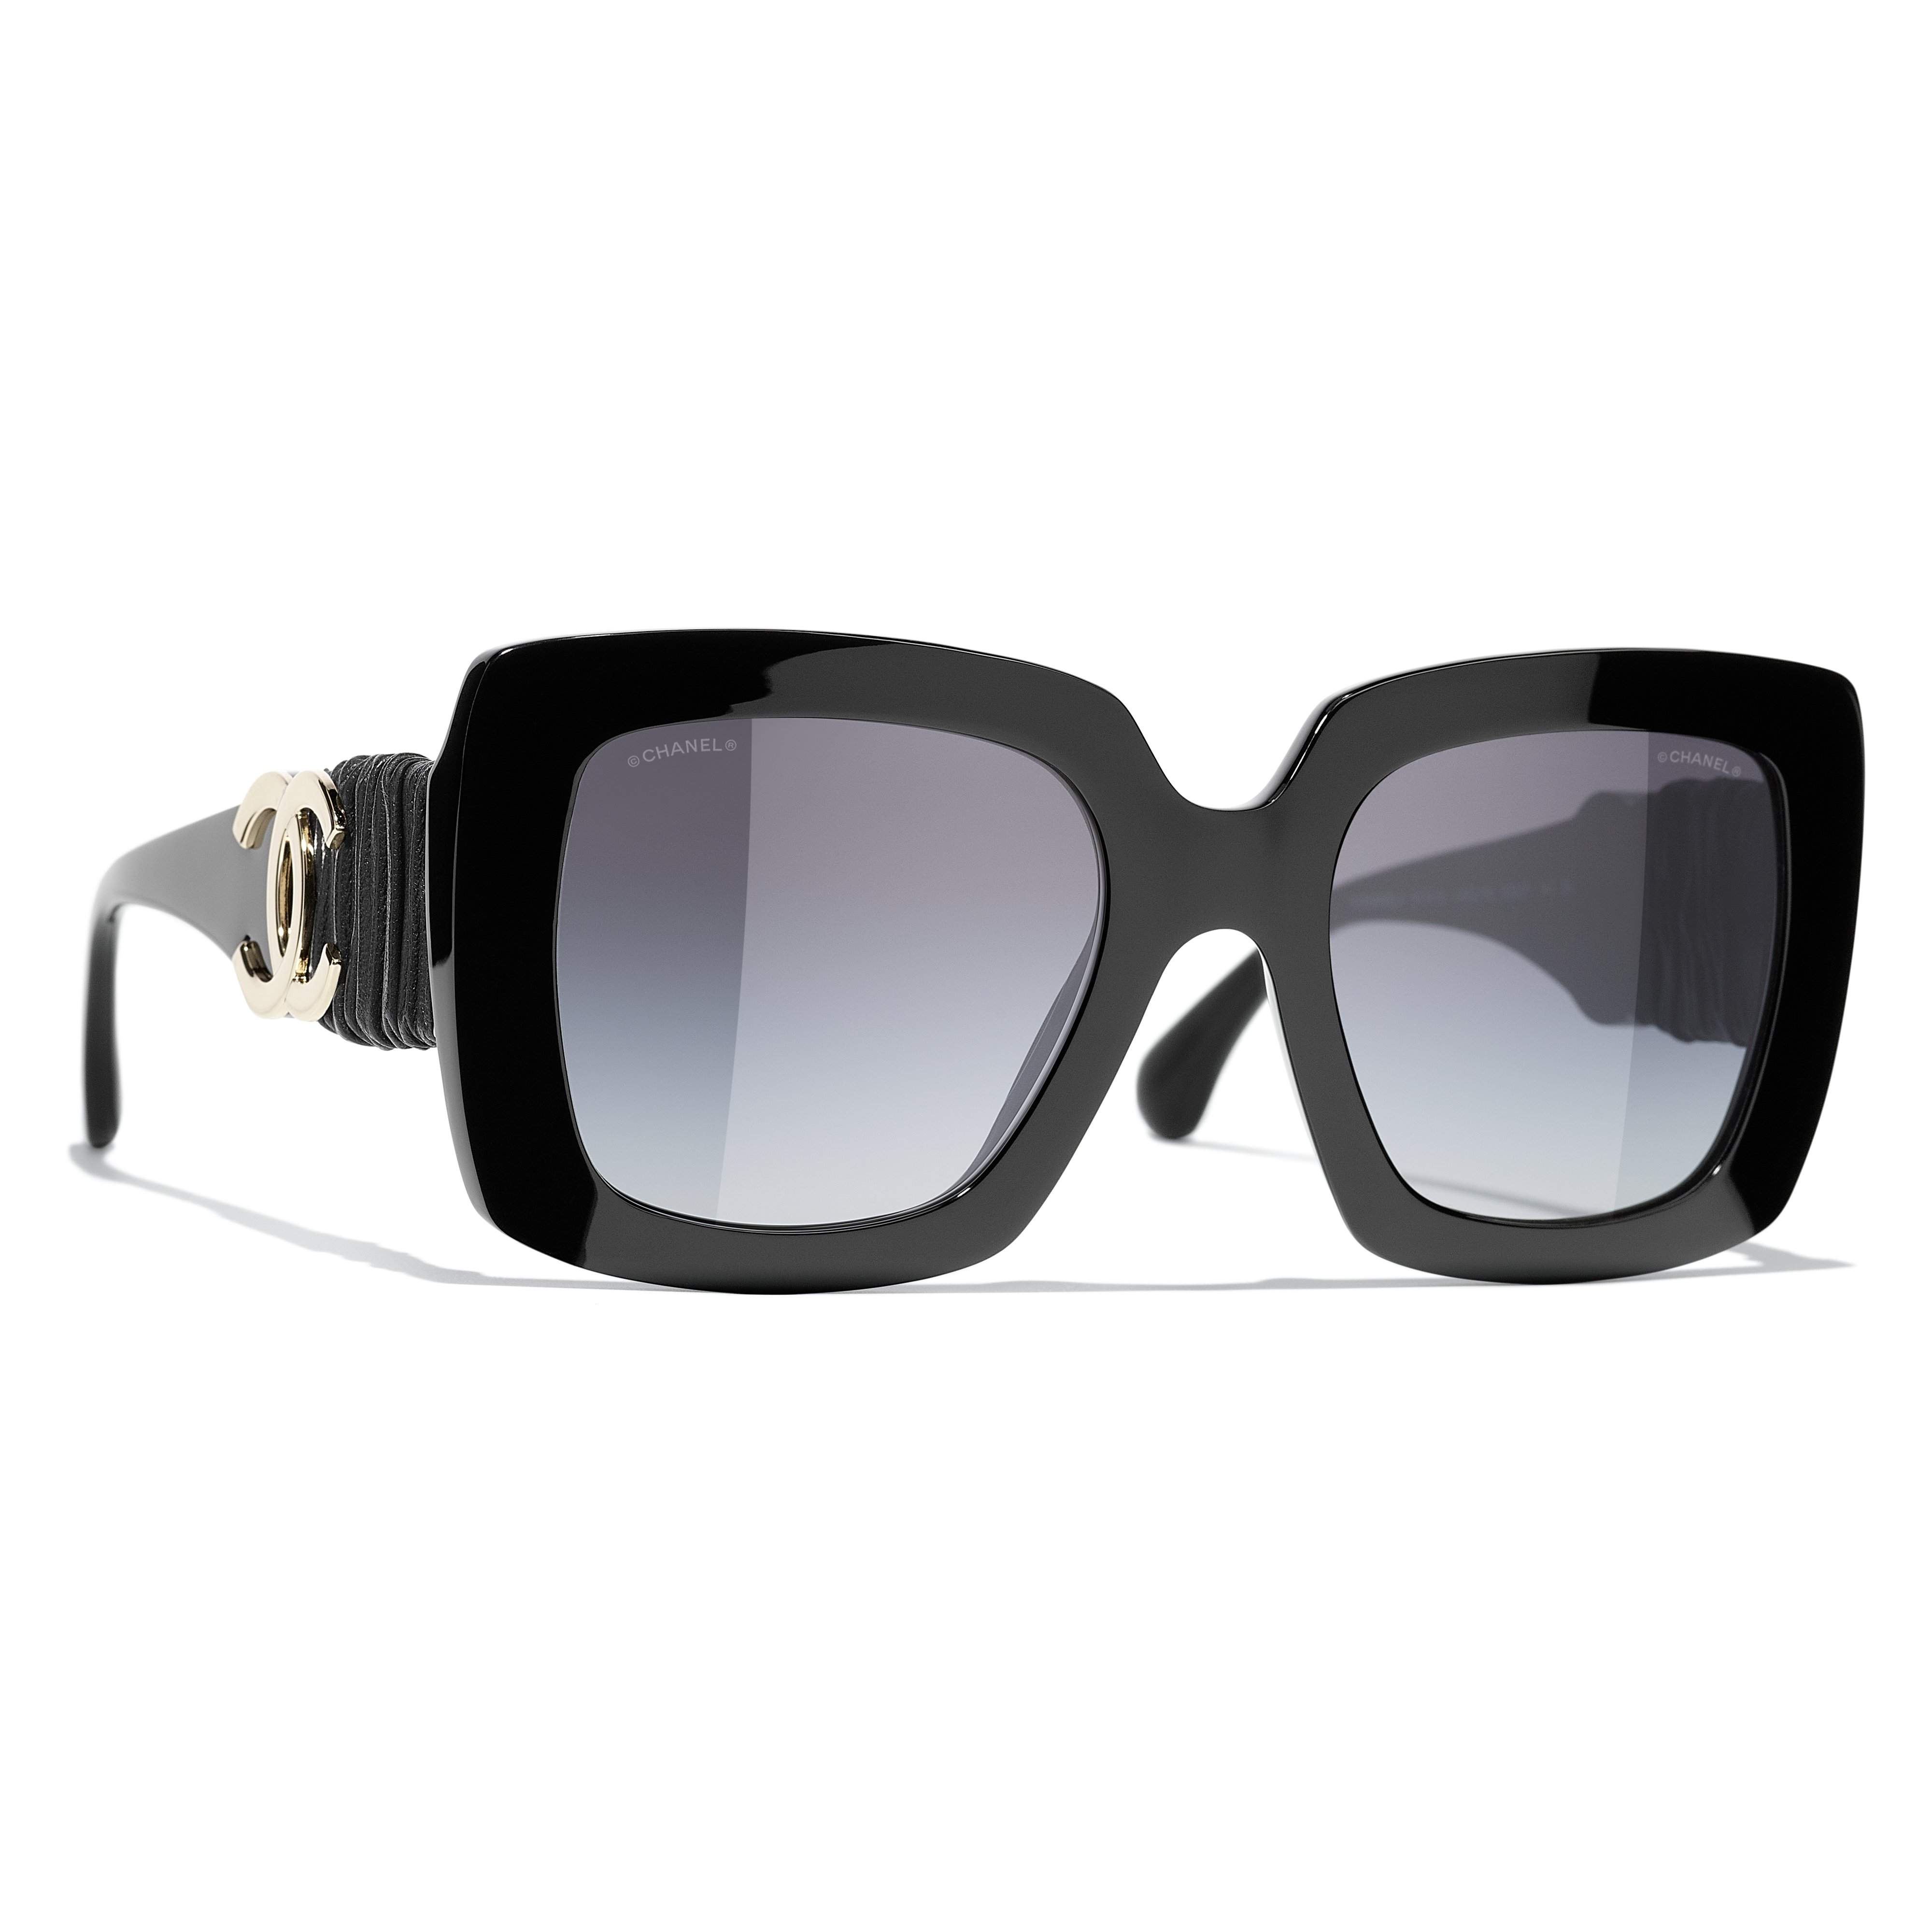 Sunglasses Chanel C622/S6 52-21 Black stock | Price 350,00 € | Visiofactory